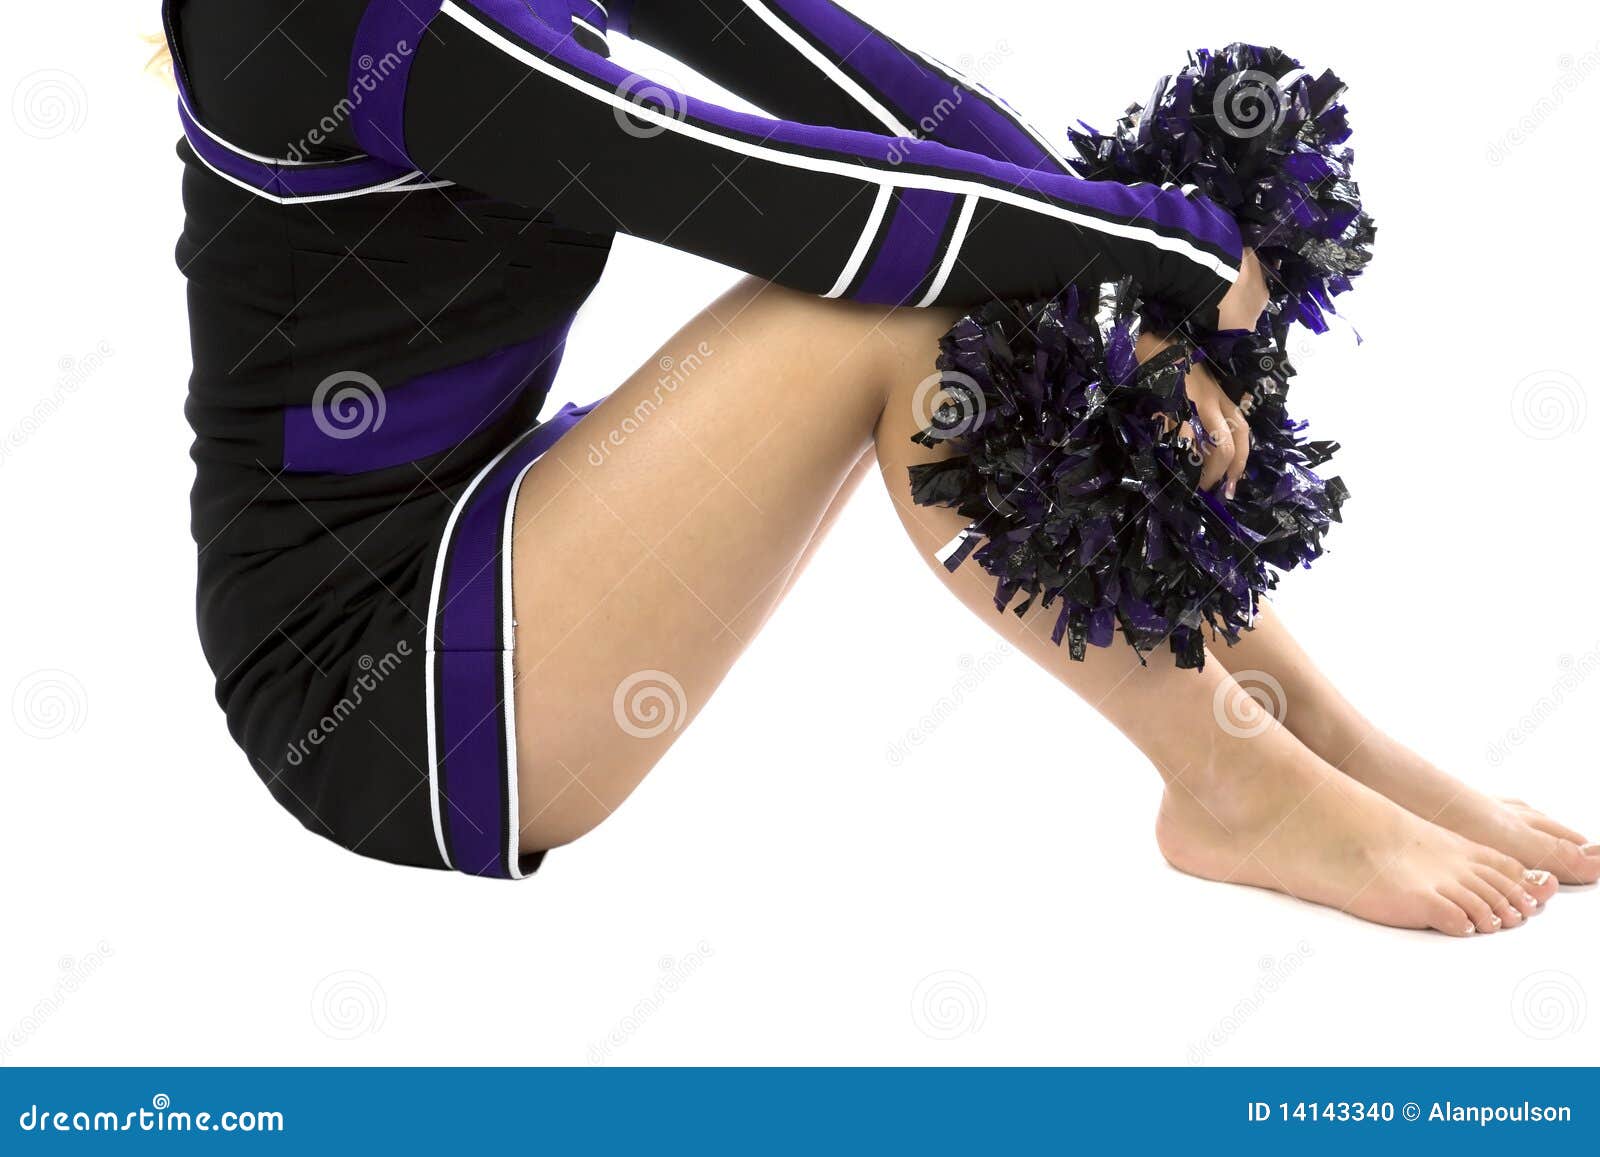 Cheerleader bare feet